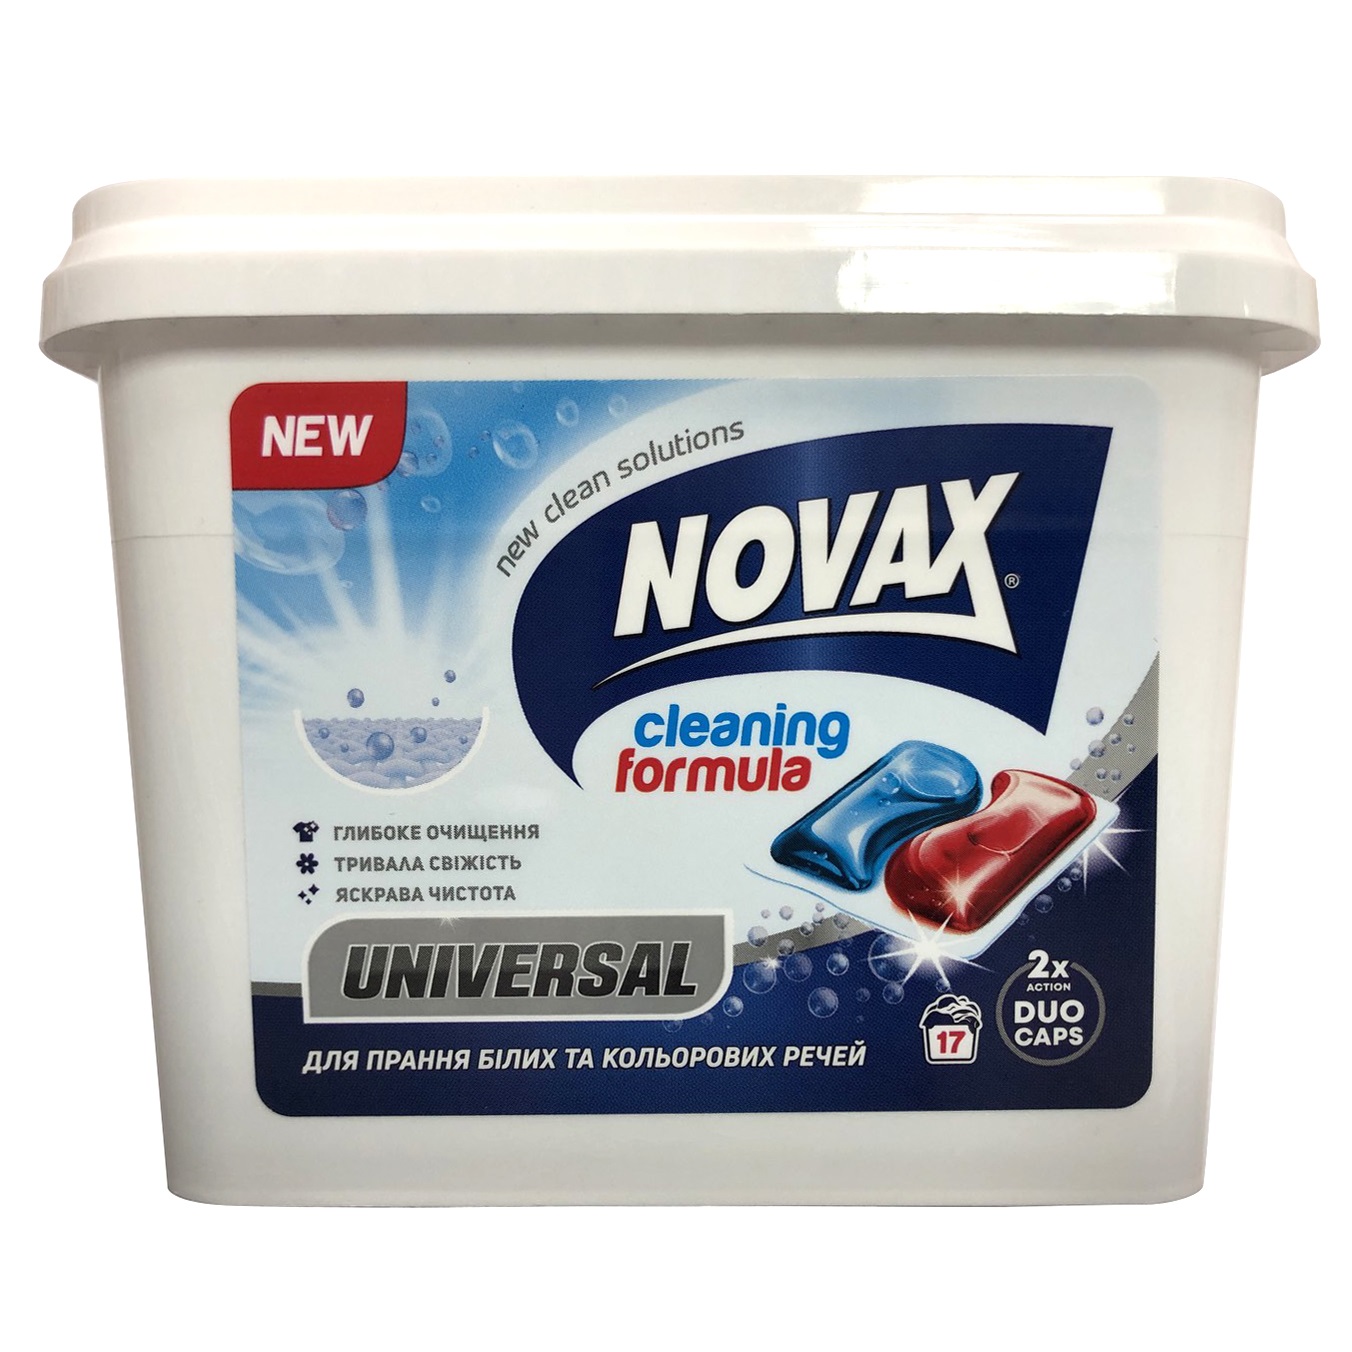 Капсулы для стирки Novax Universal, 17 шт. - фото 1